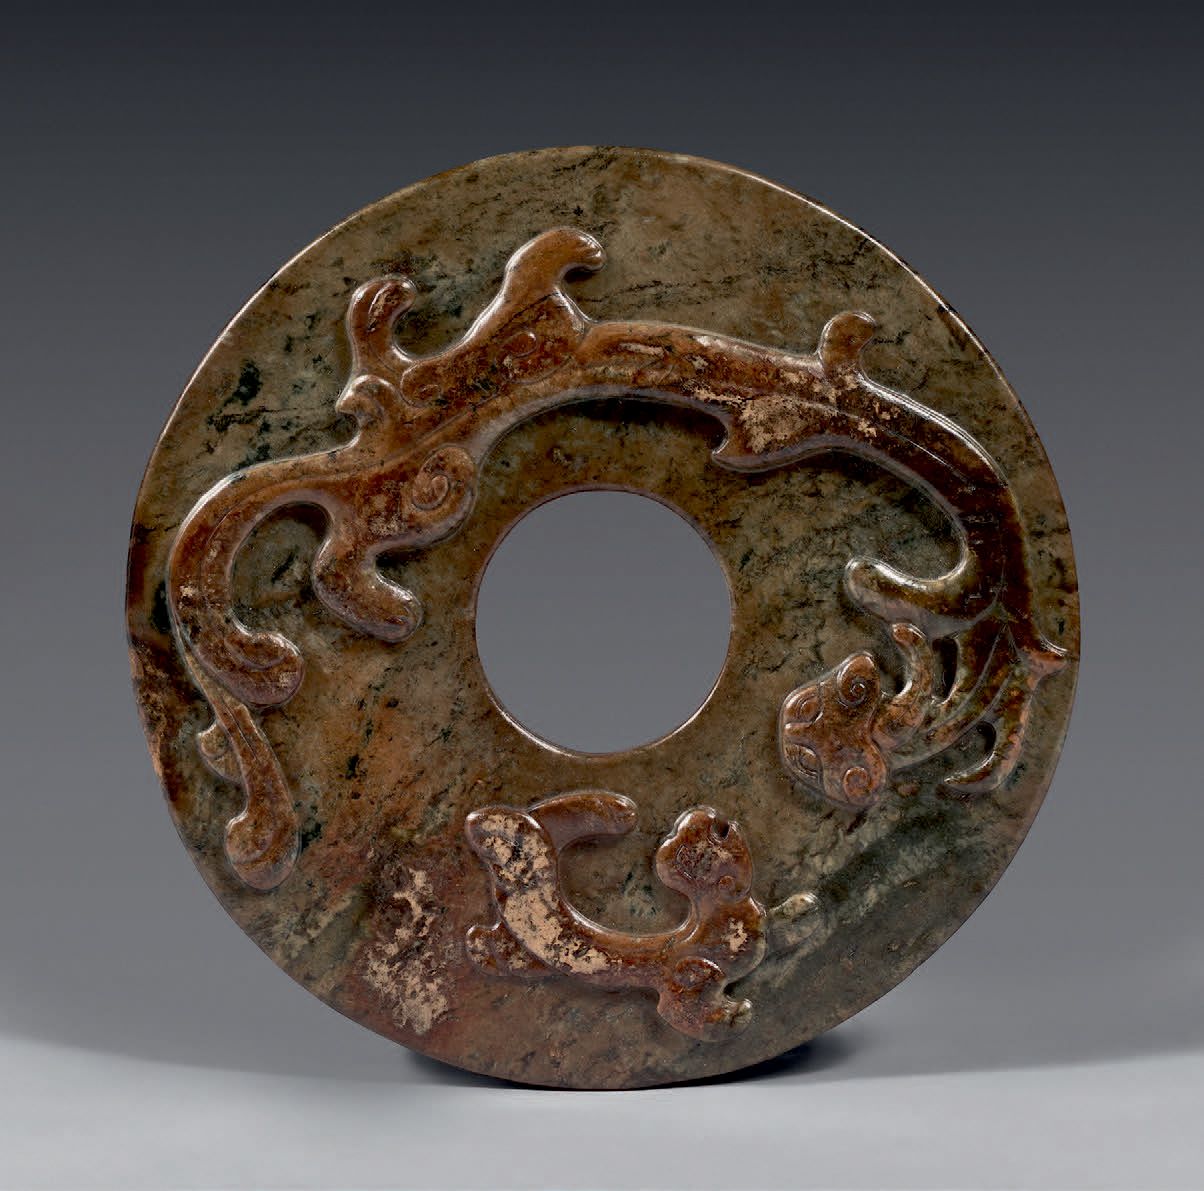 CHINE - Époque Ming (1368-1644) 绿褐色的玉（软玉）"璧 "盘，浮雕有两条赤龙。
(碎片）。
D: 17 cm